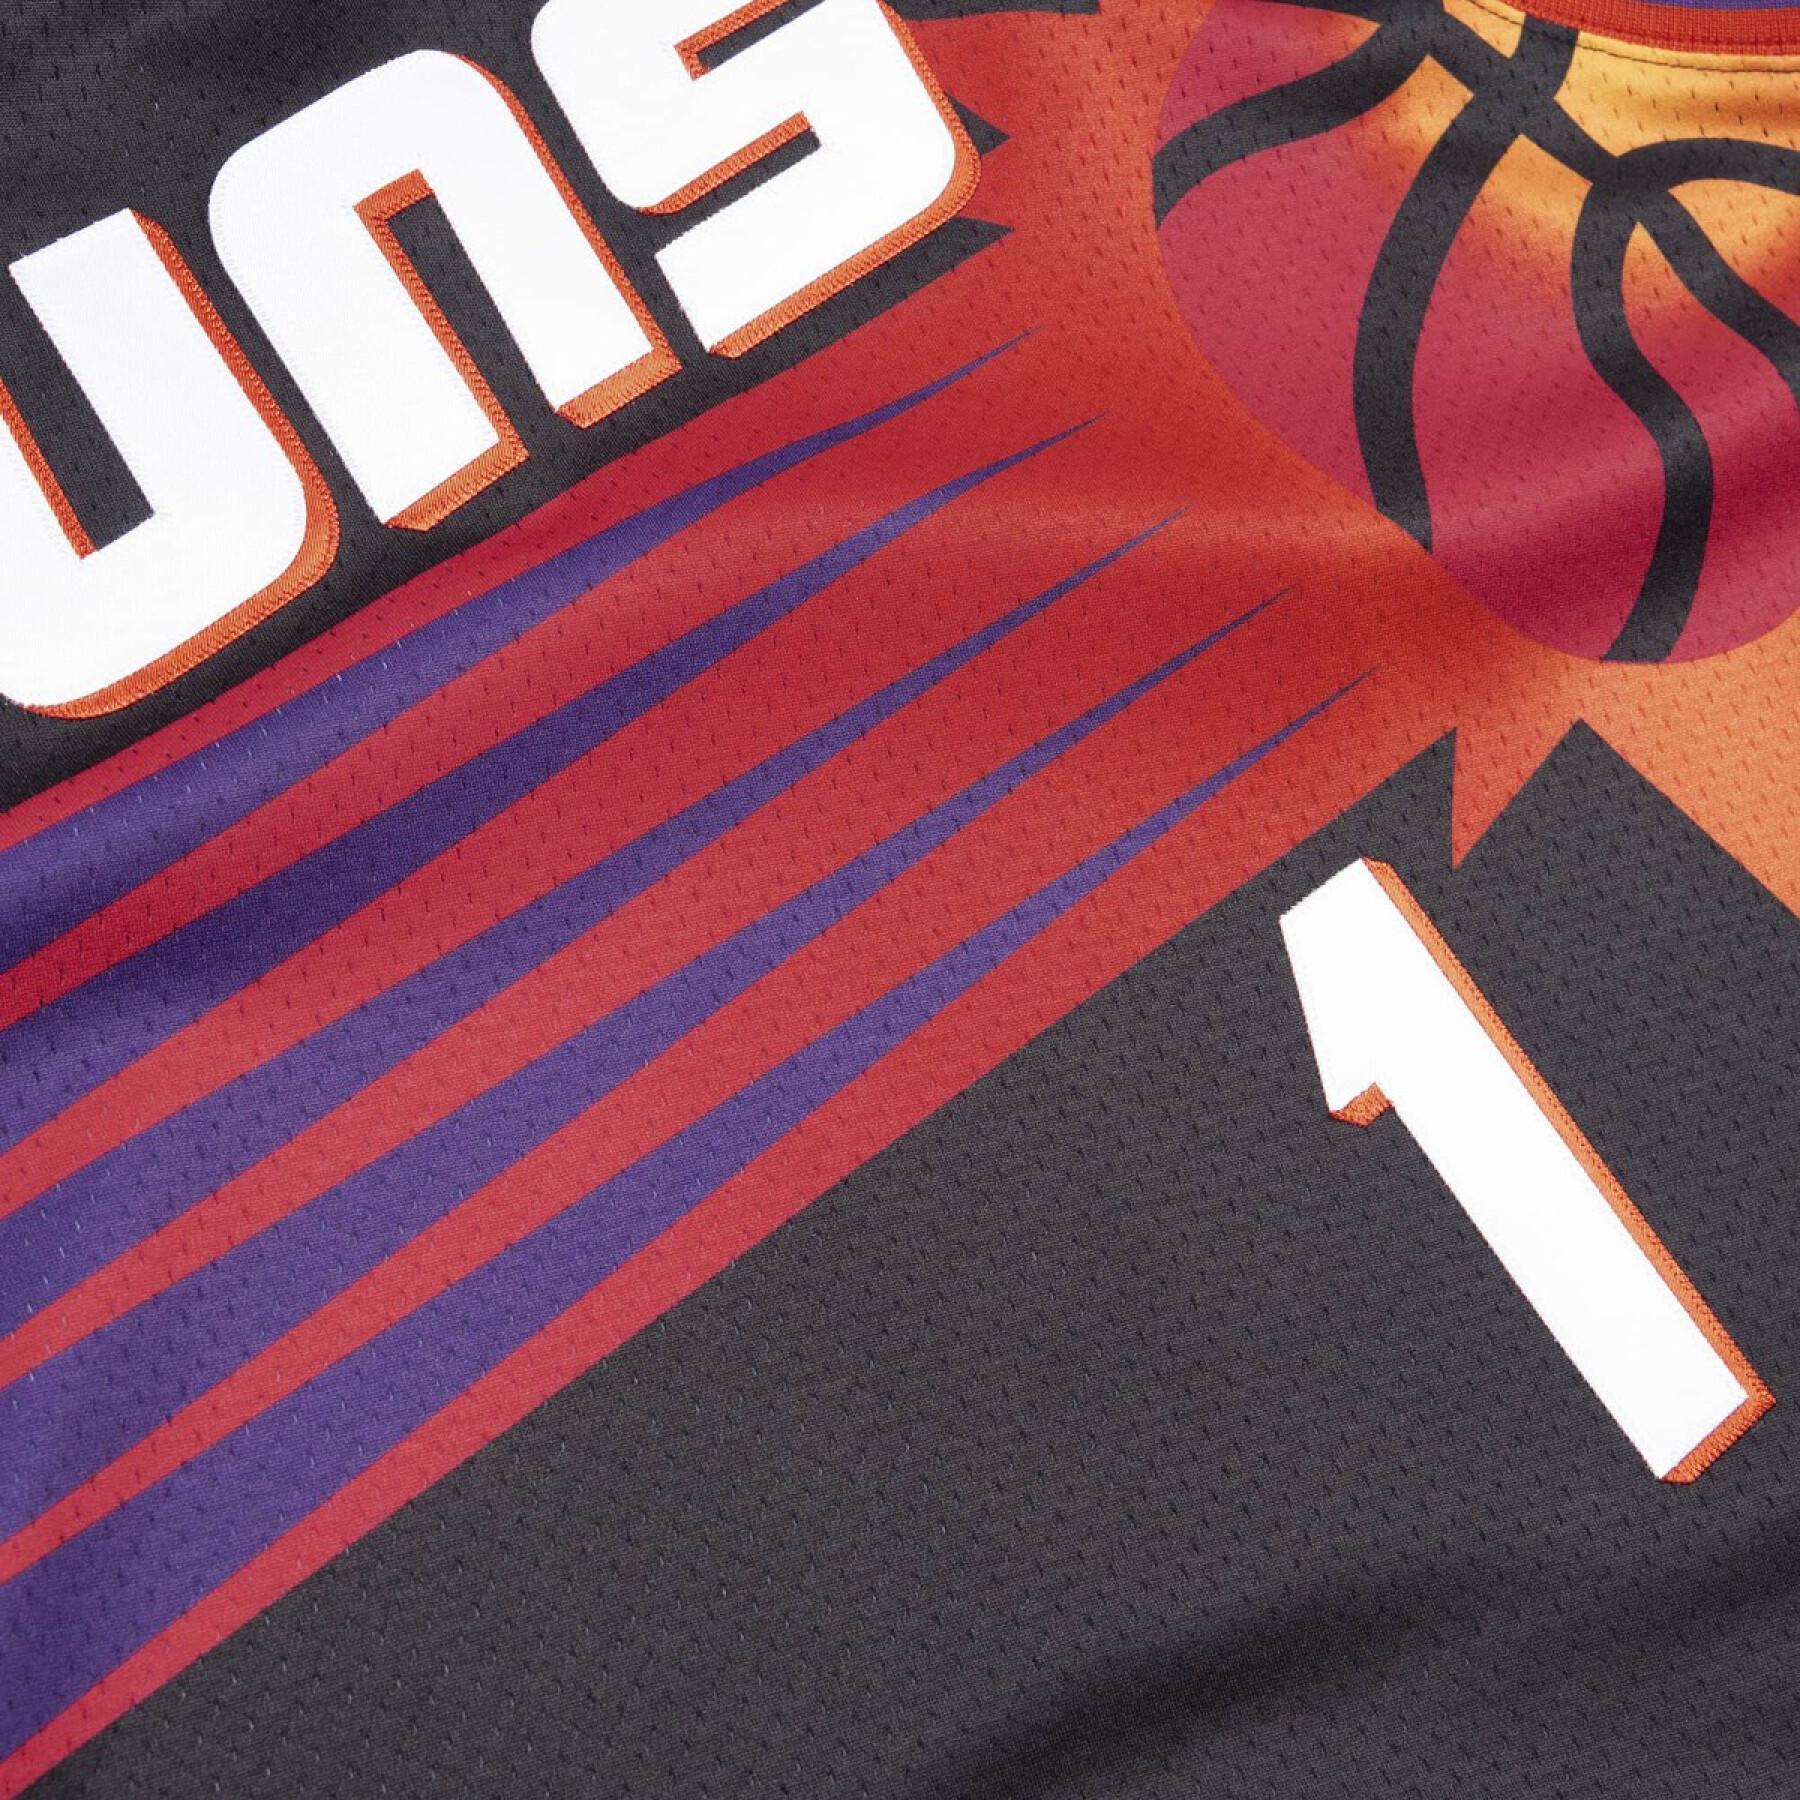 Autentisk tröja Phoenix Suns nba Anfernee Hardaway 1999/00